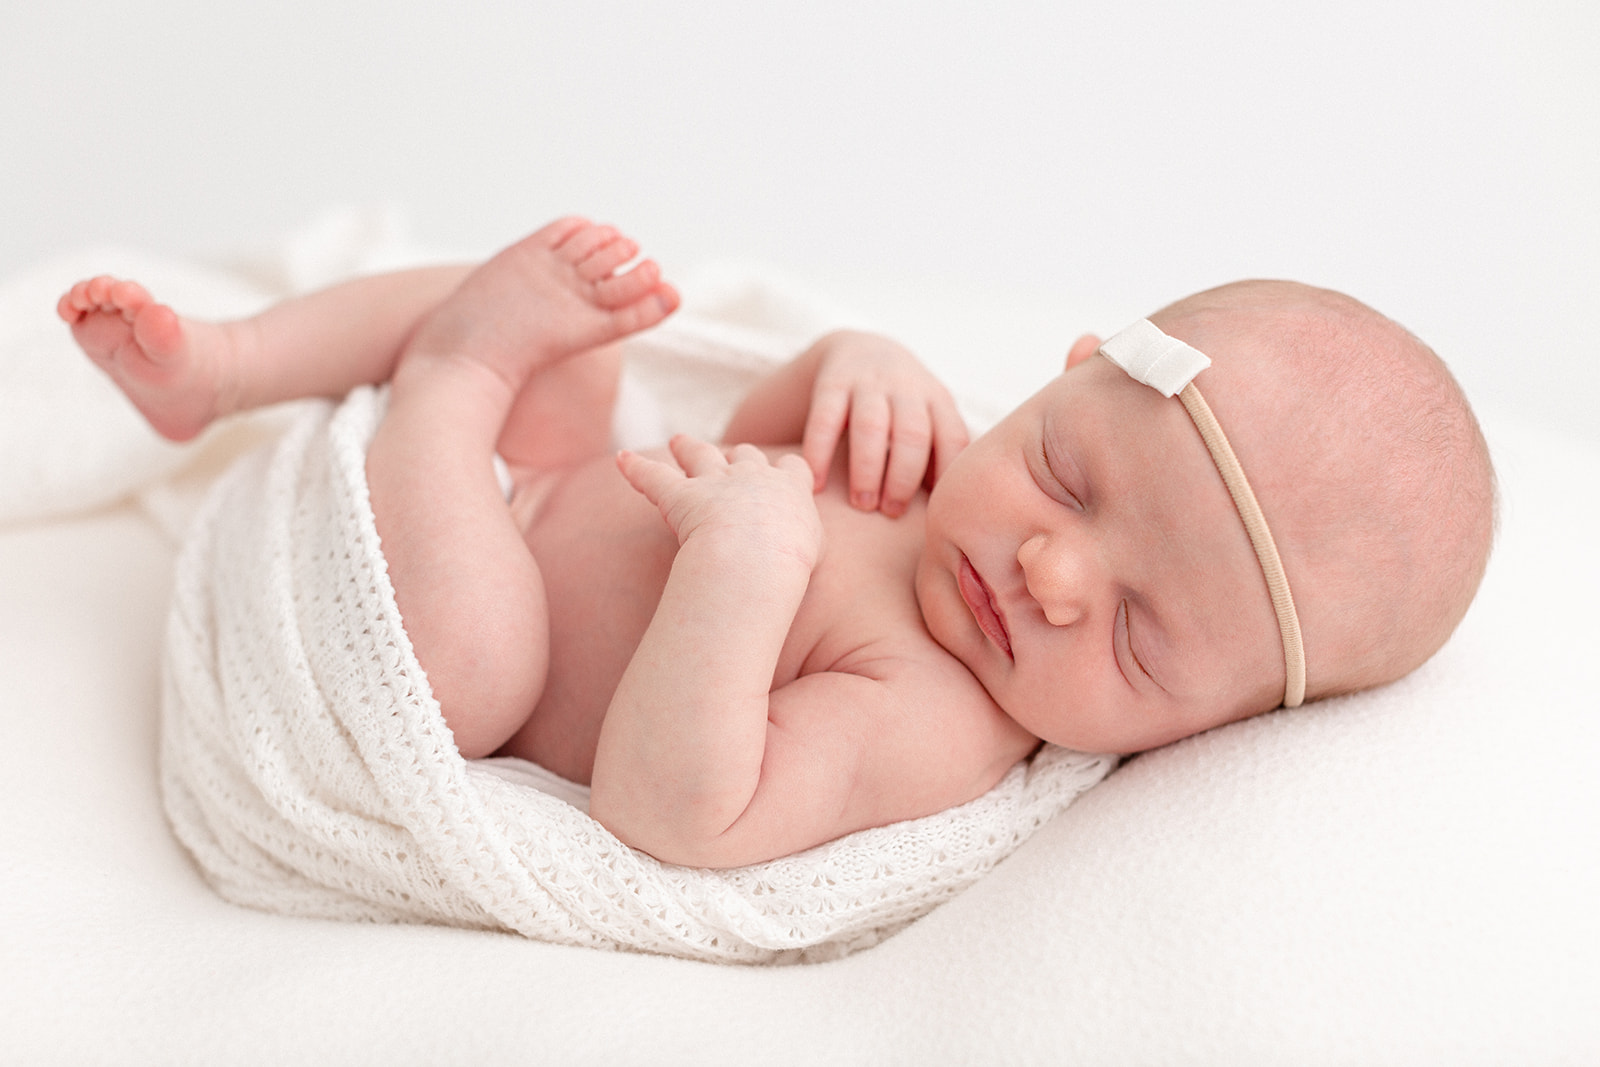 A newborn baby sleeps on a cushion in a white blanket before visiting a Portland pediatrician